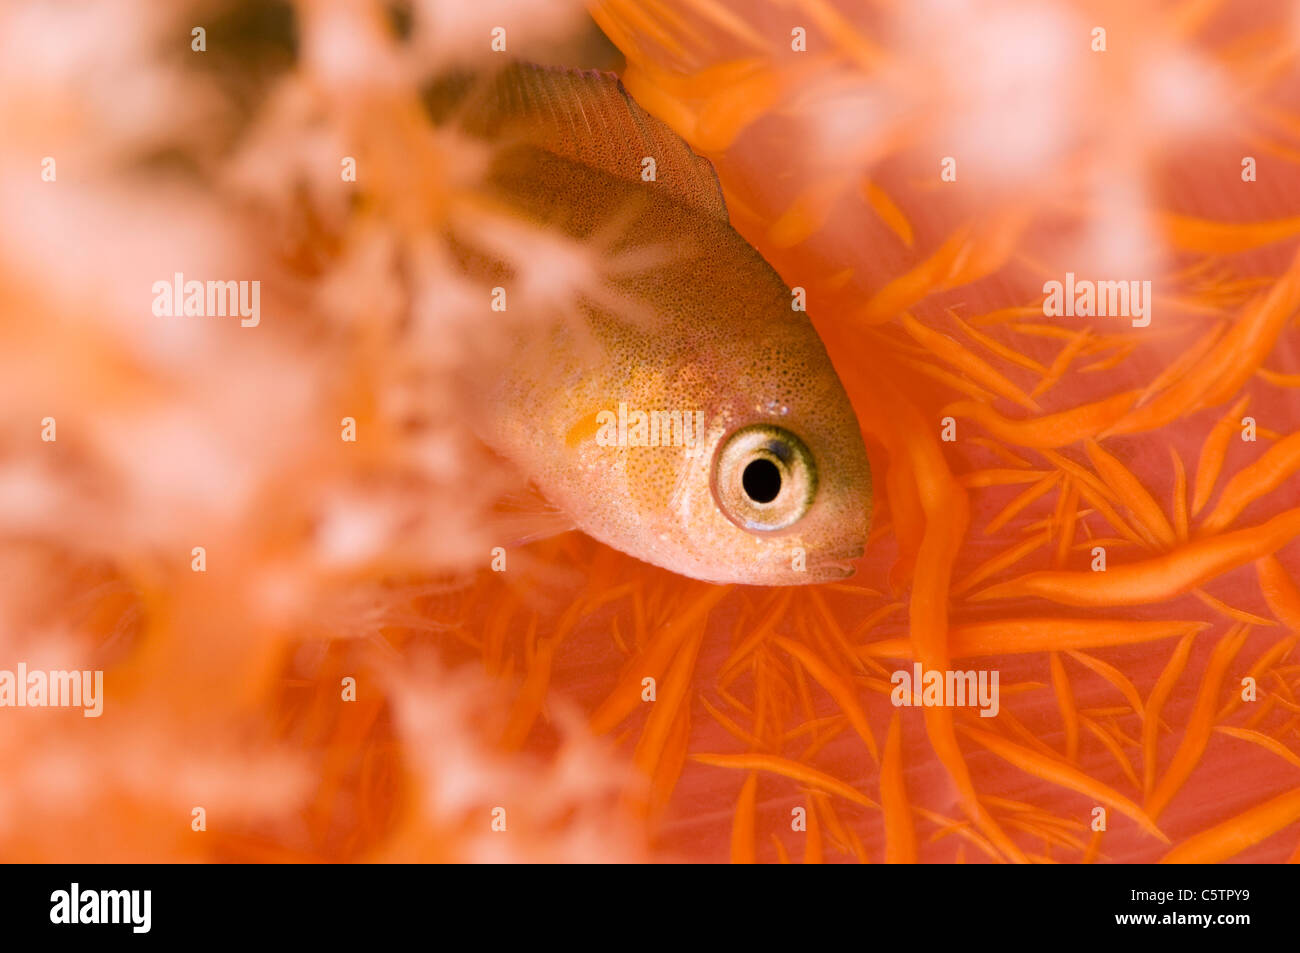 Egypt, Red Sea, Damsel Fish (Pomacentridae) close-up Stock Photo